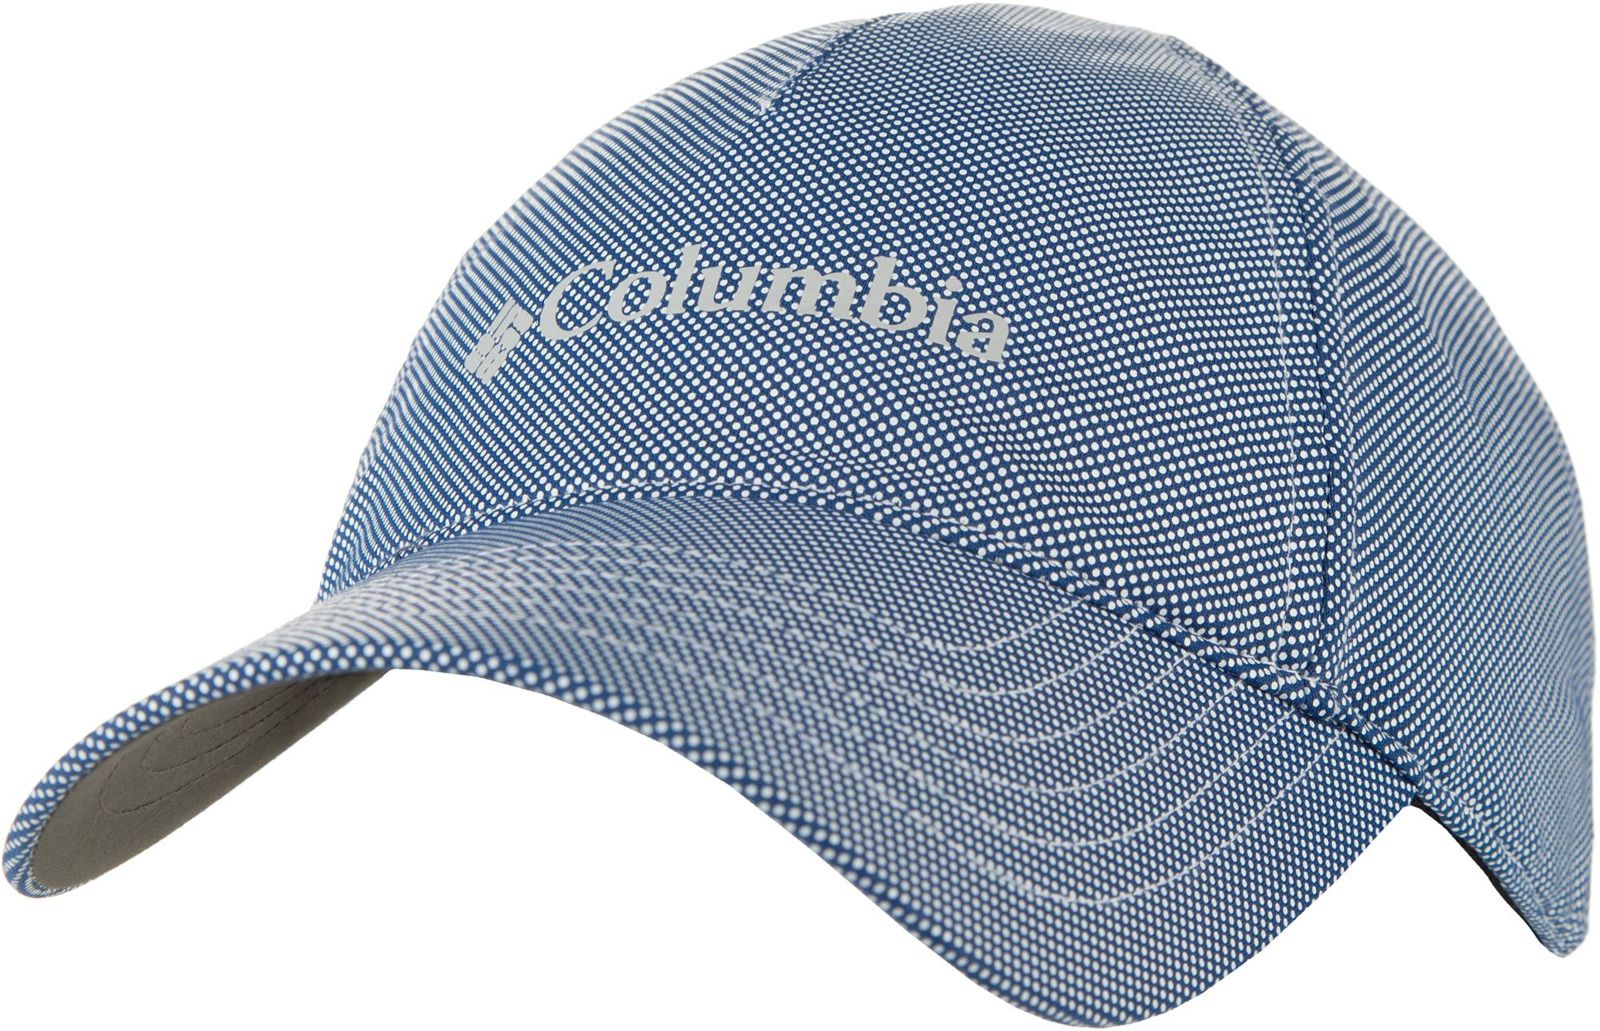  Columbia Solar Chill Hat, : . 1786391-470.  